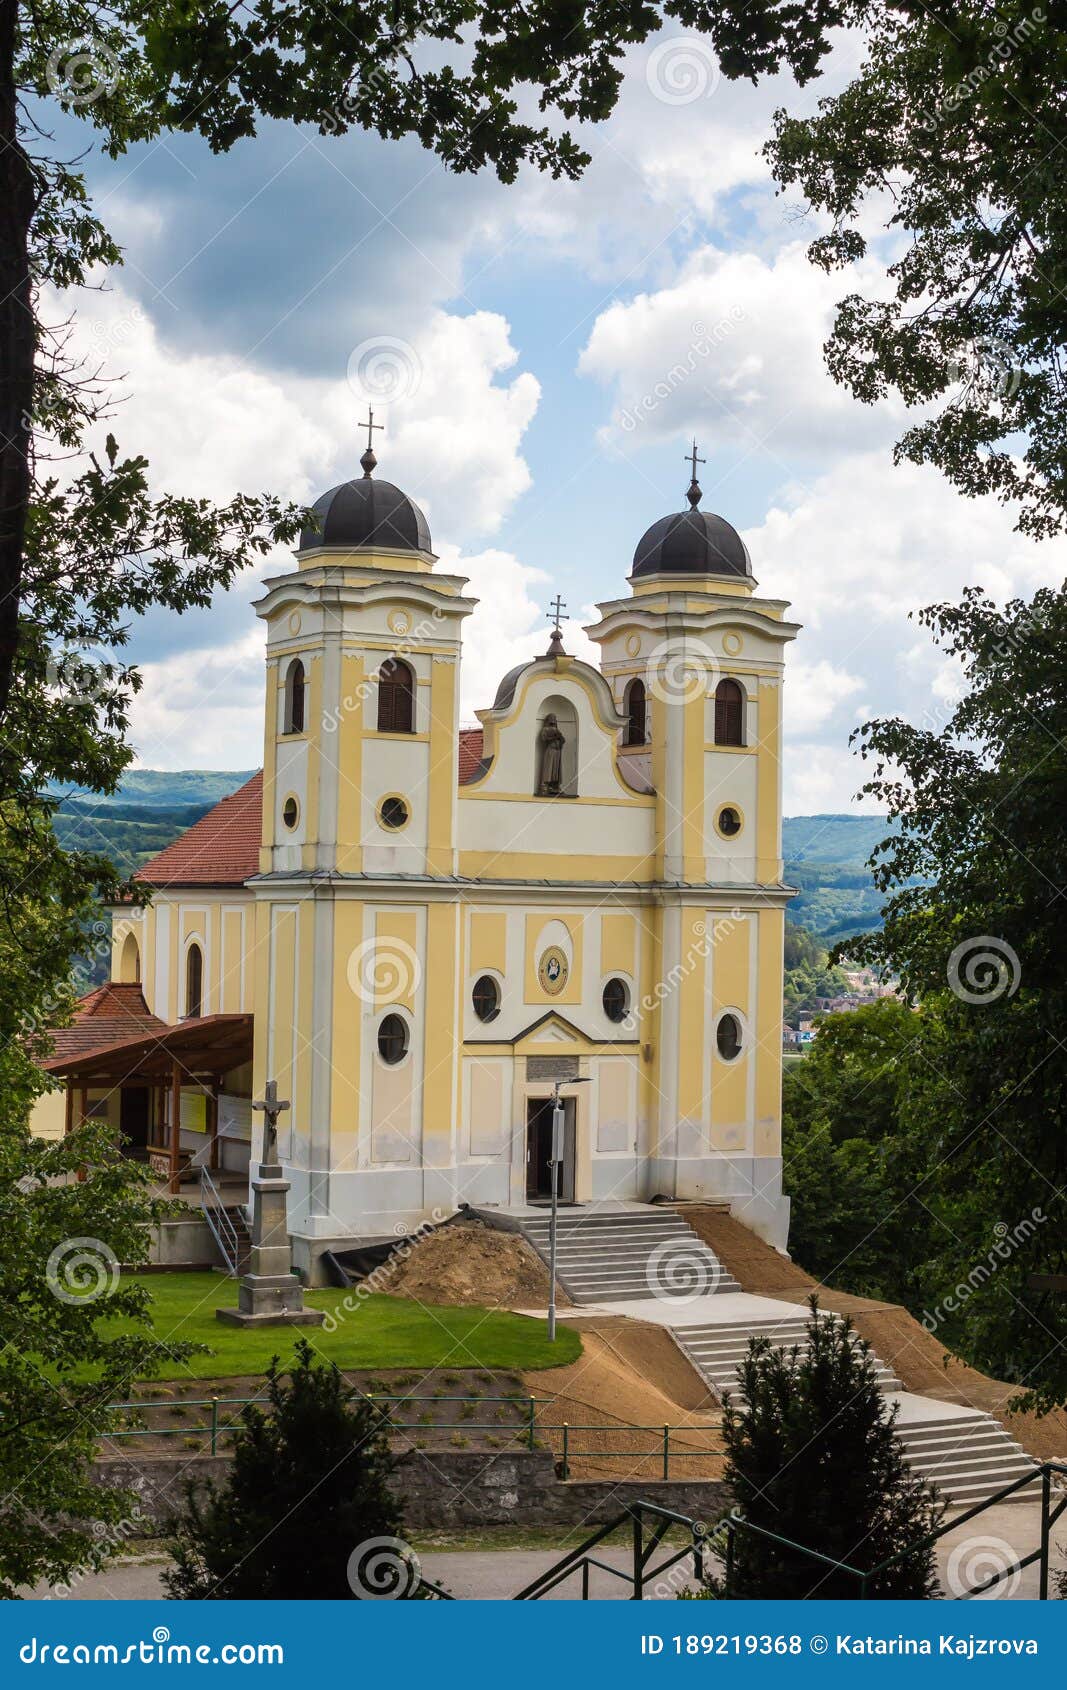 monastery in velka skalka, slovakia